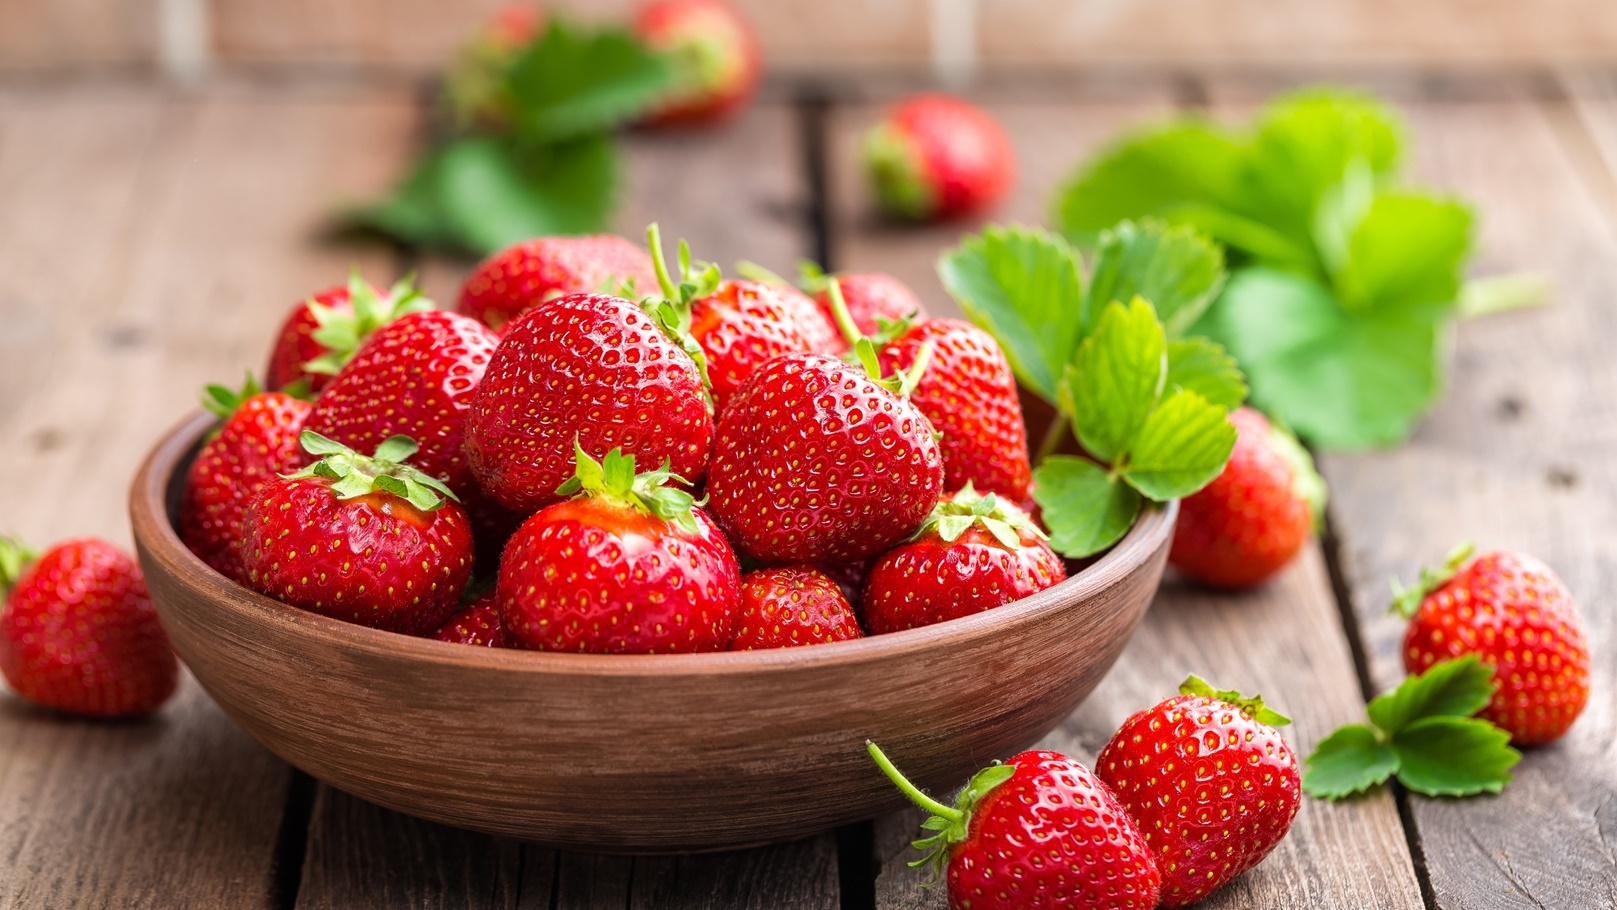 fresh-juicy-strawberries-with-leaves-strawberry-2021-08-26-17-20-59-utc